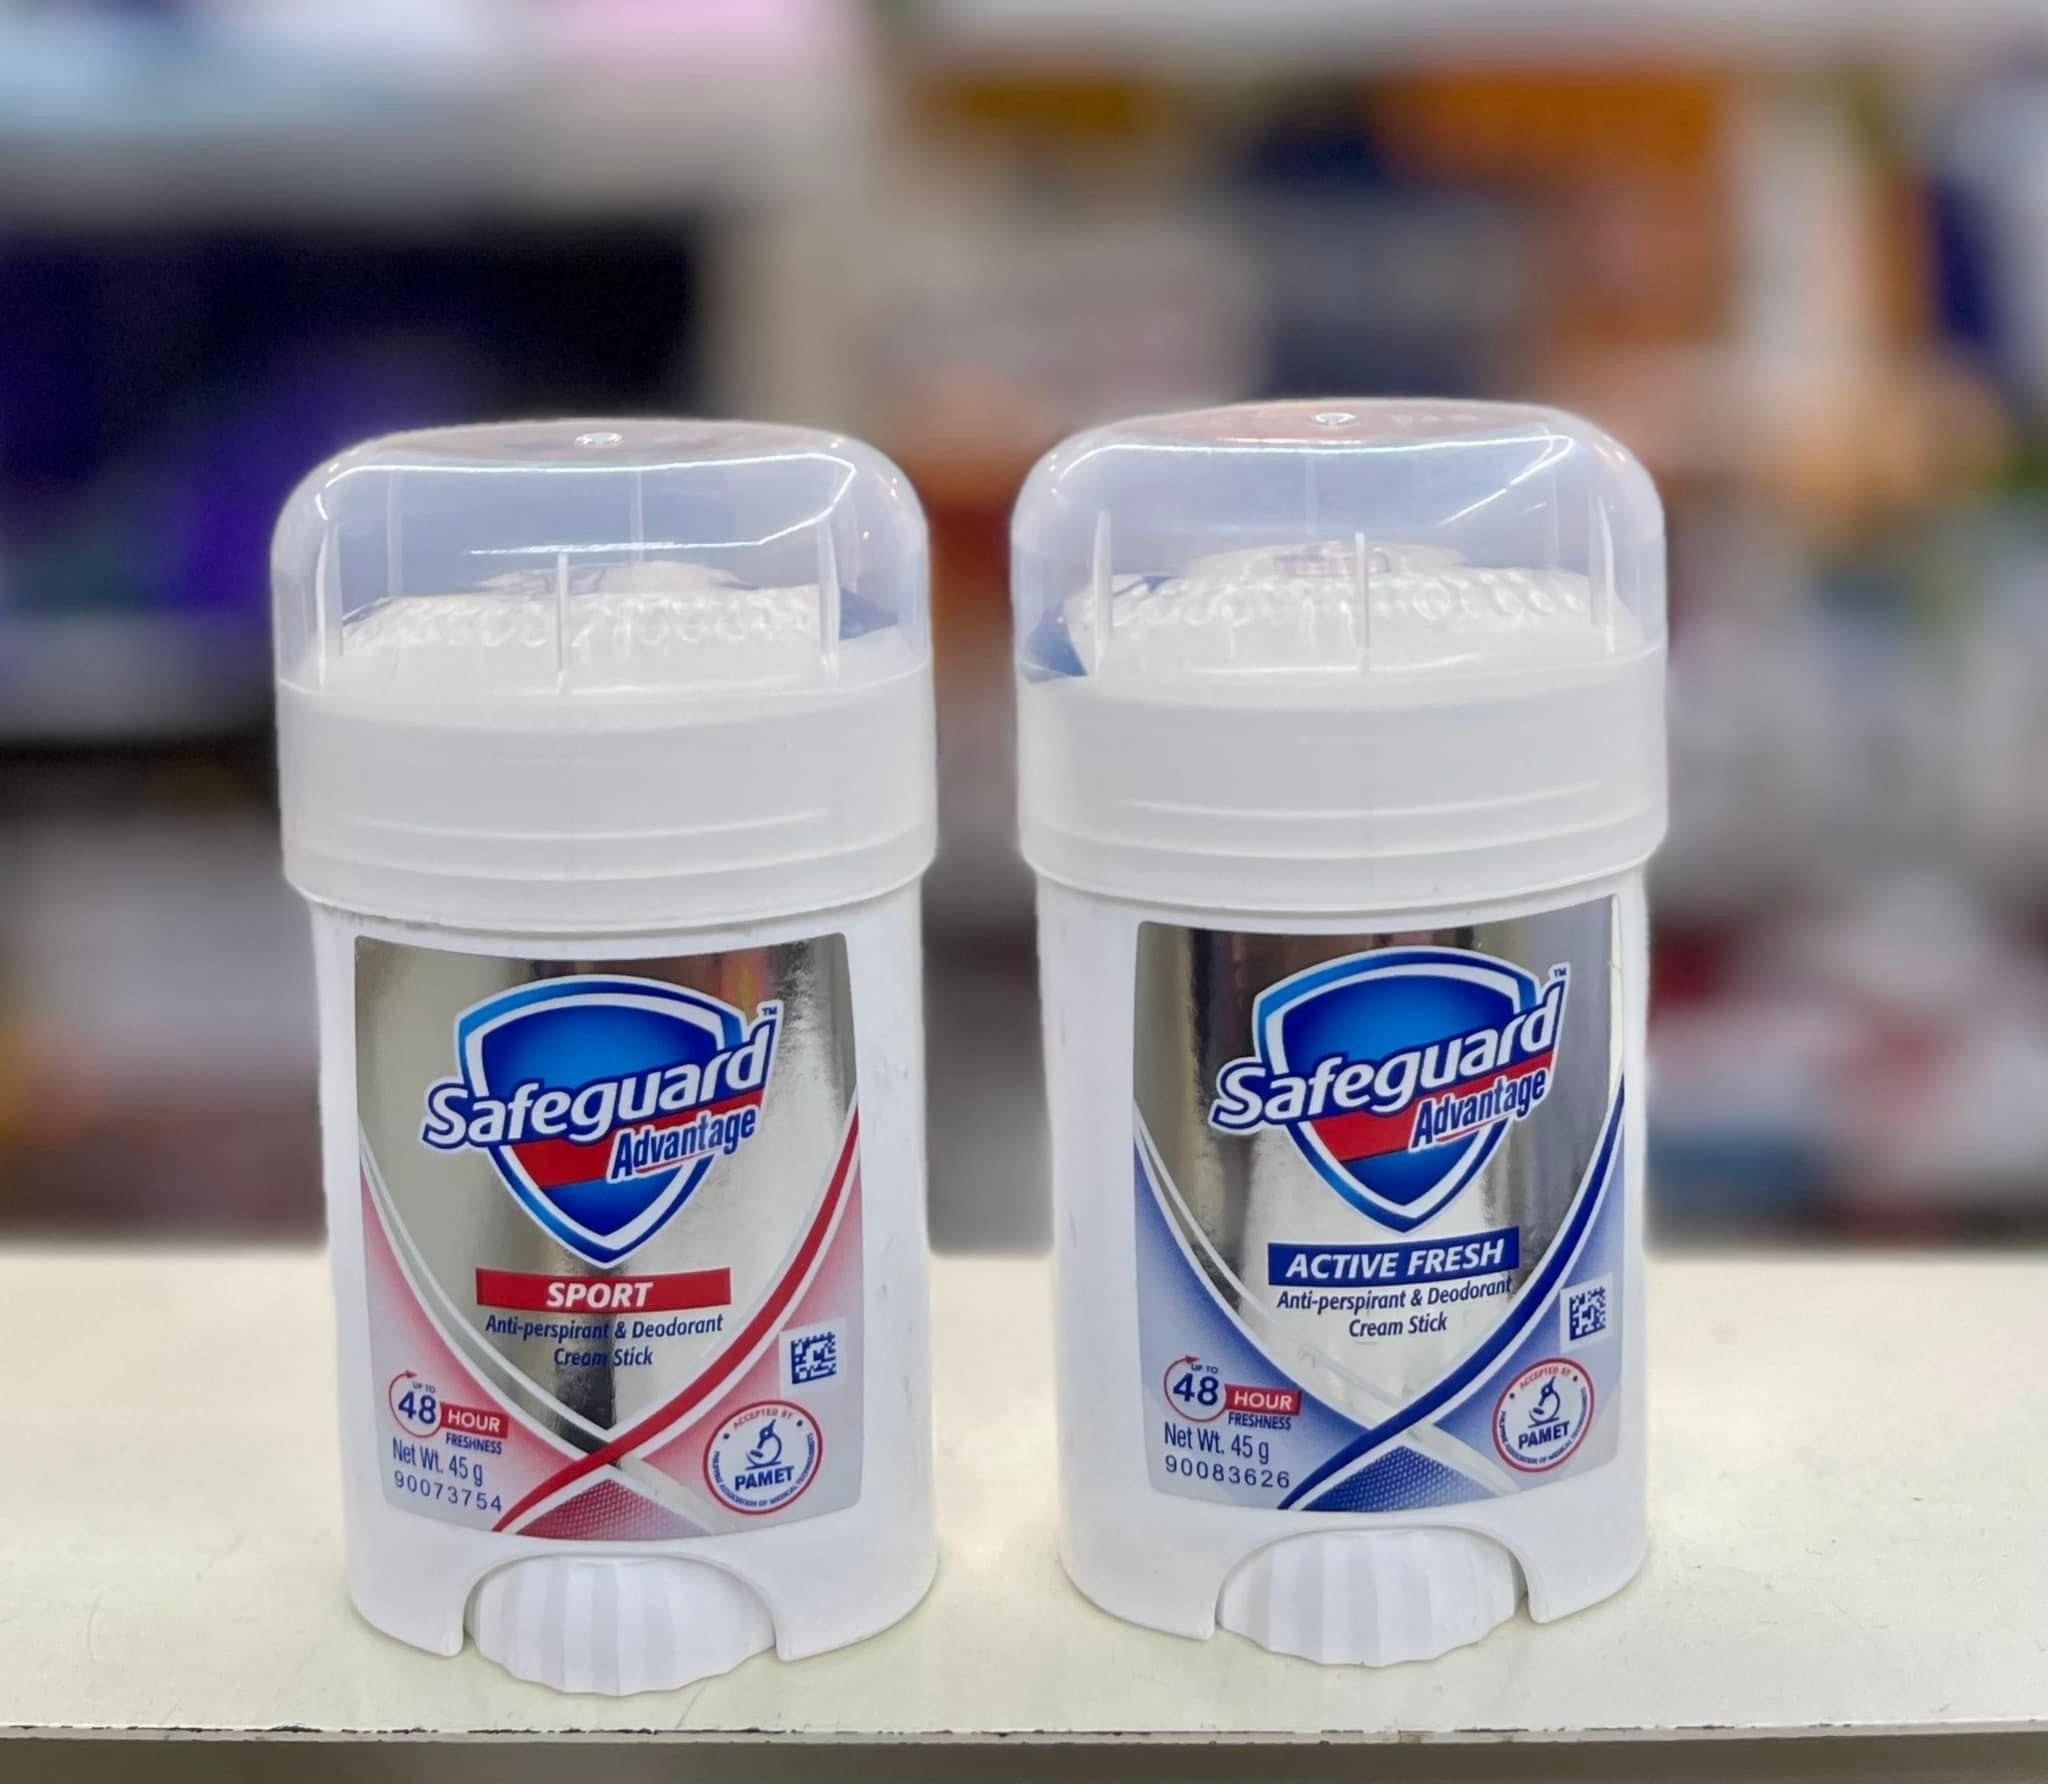 Safeguard Advantage Sport Anti-Perspirant & Deodorant Cream Stick